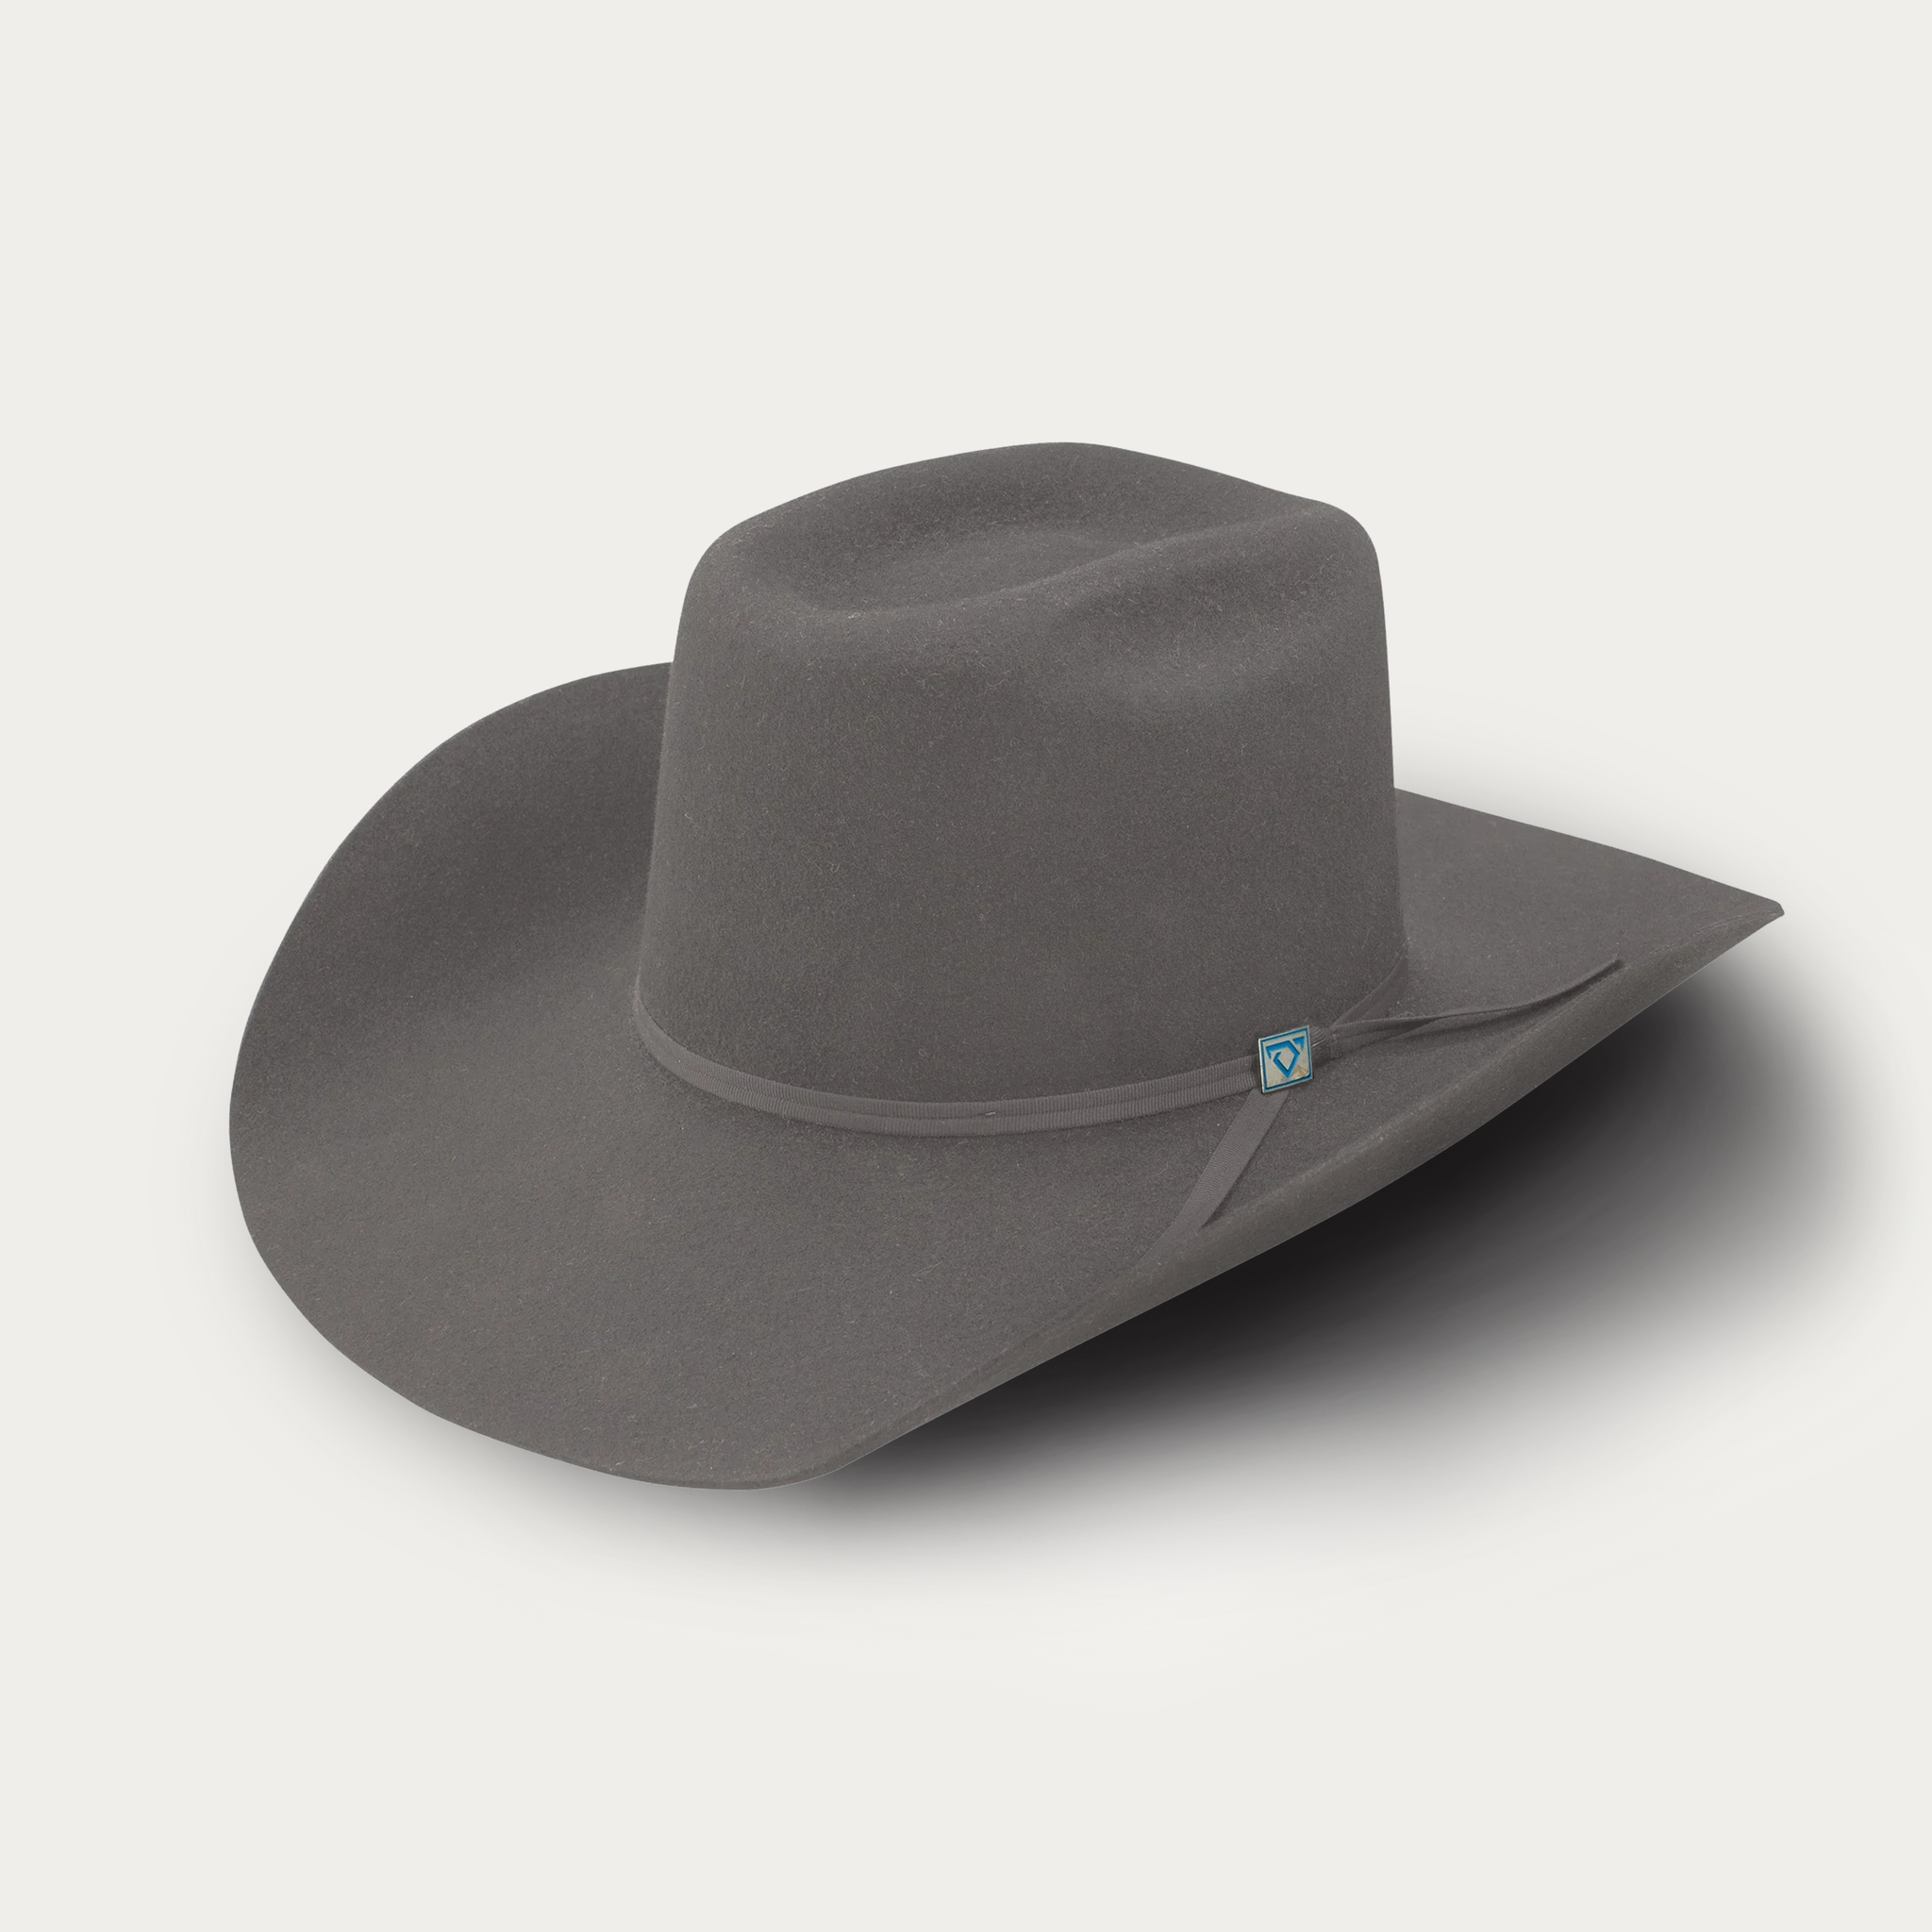 Wild West Classic Cowboy Hat - Grey